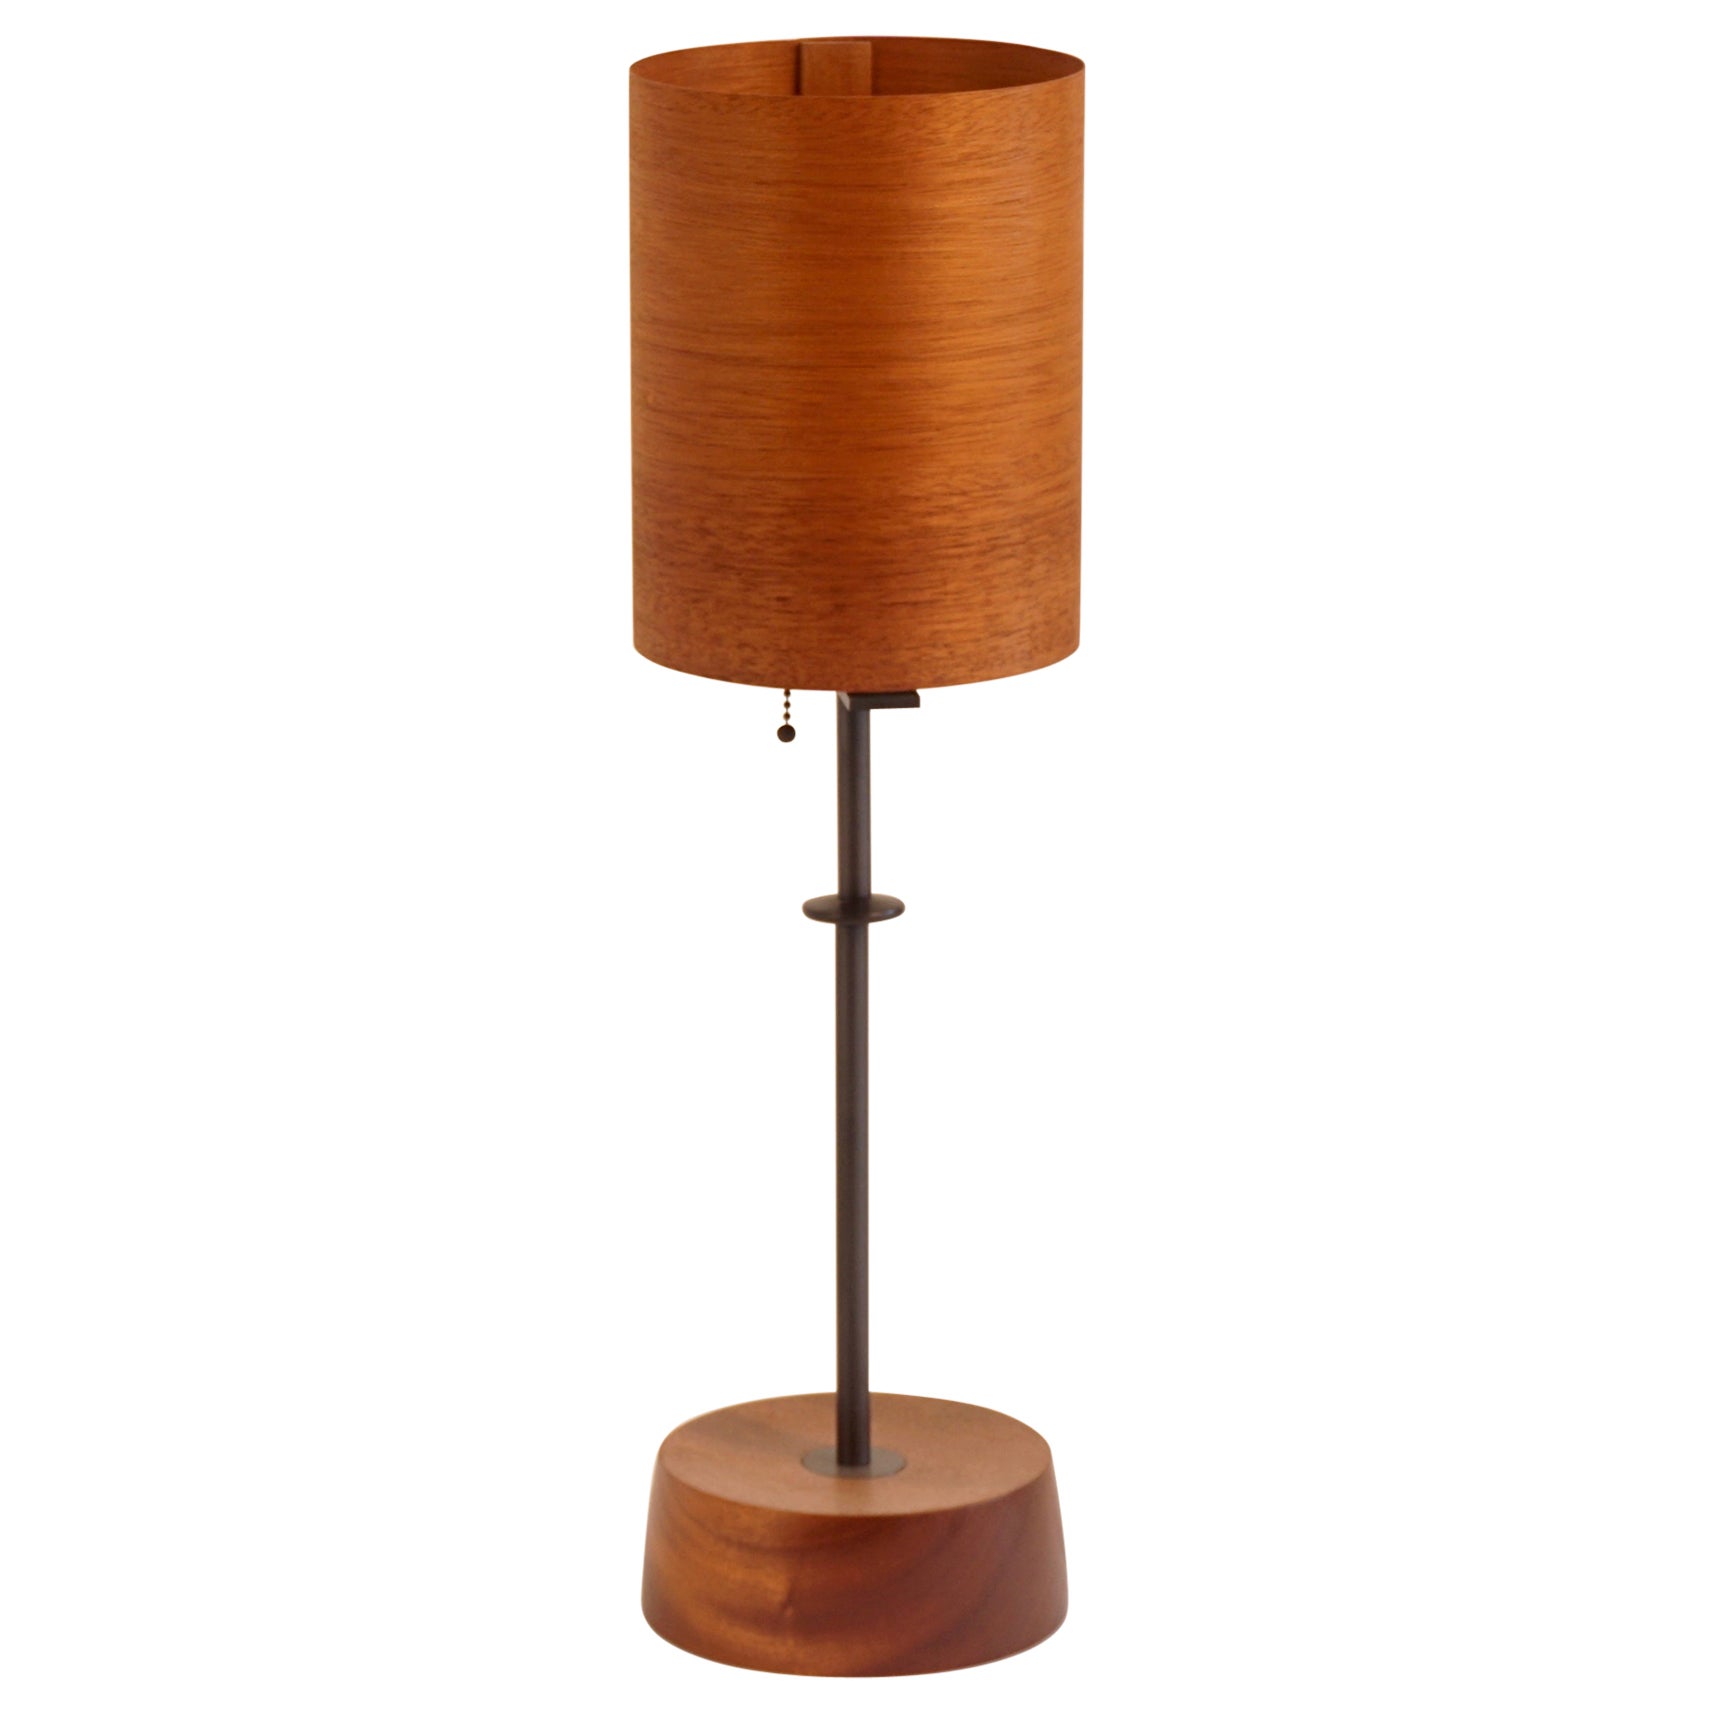 Mahogany Wood Veneer Table Lamp #2 with Blackened Bronze Frame